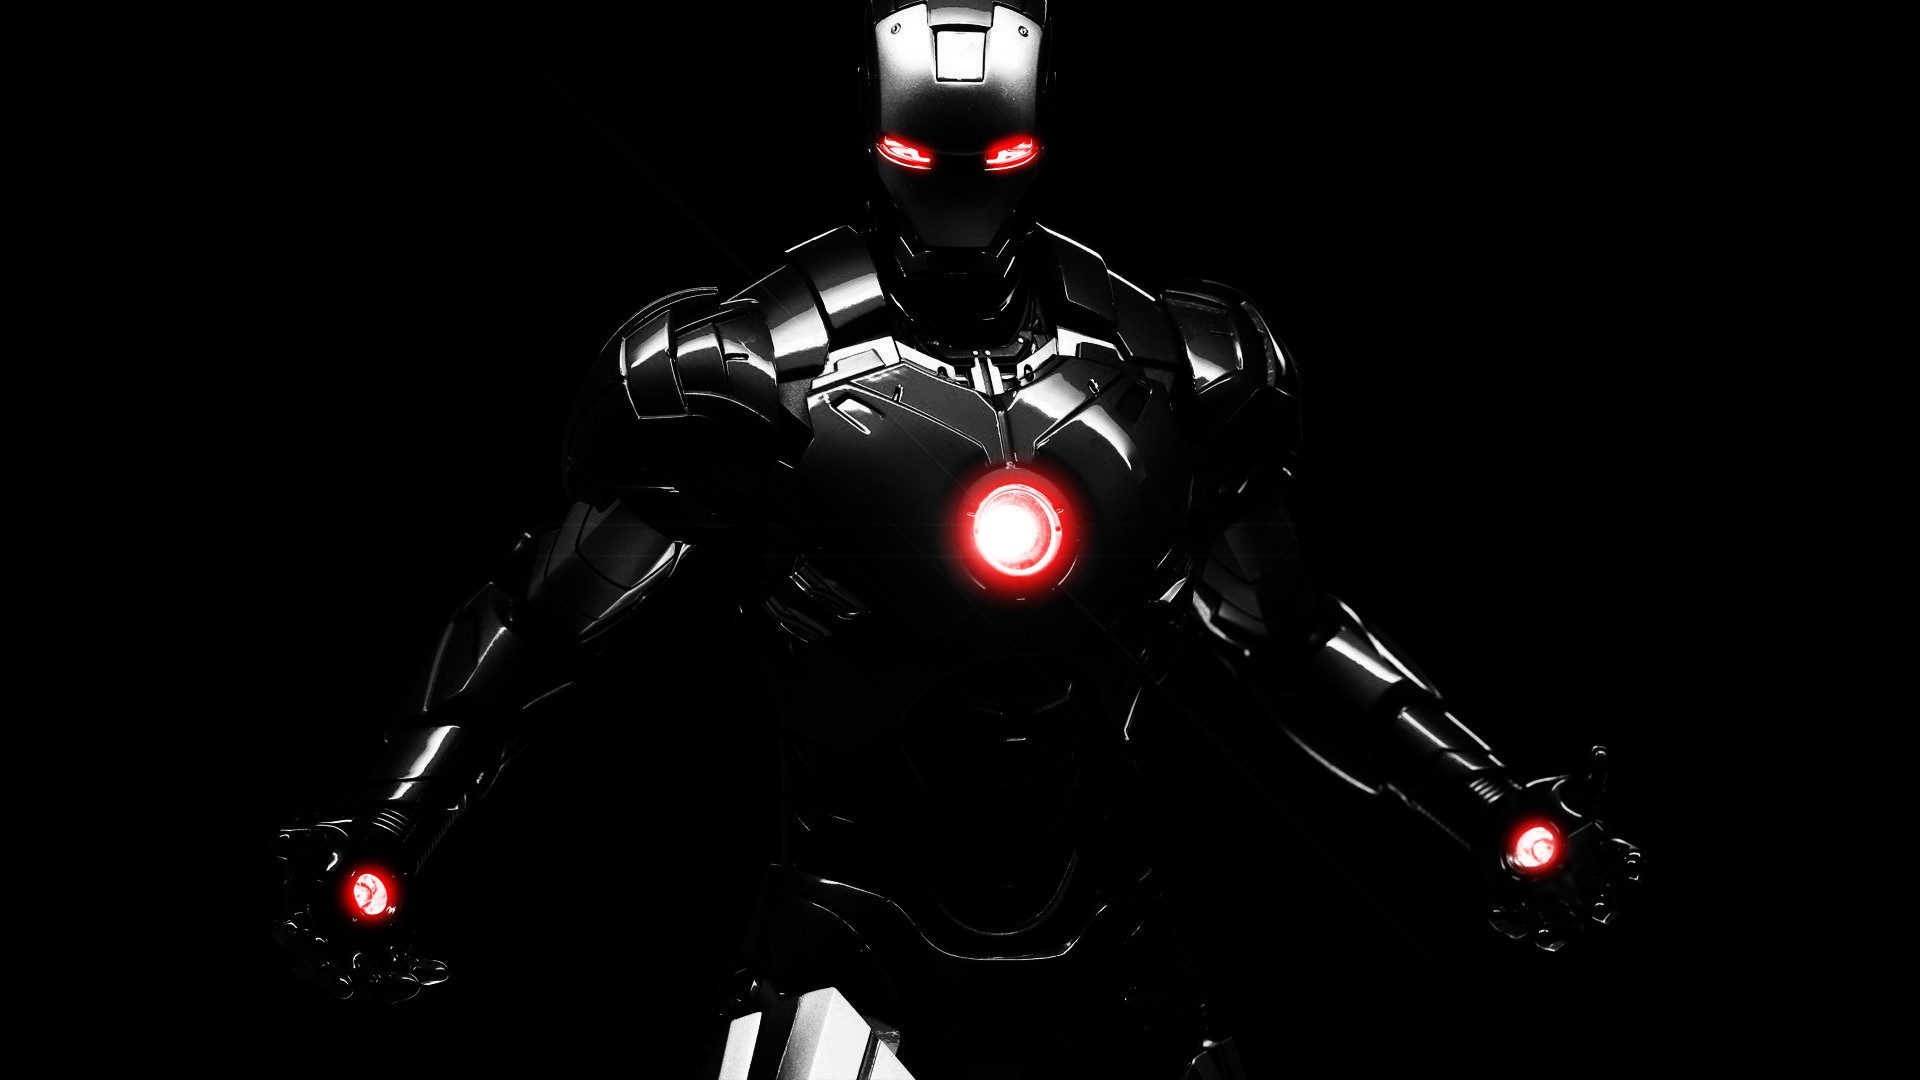 General 1920x1080 armor simple background digital art CGI Iron Man red eyes glowing eyes black background superior iron man